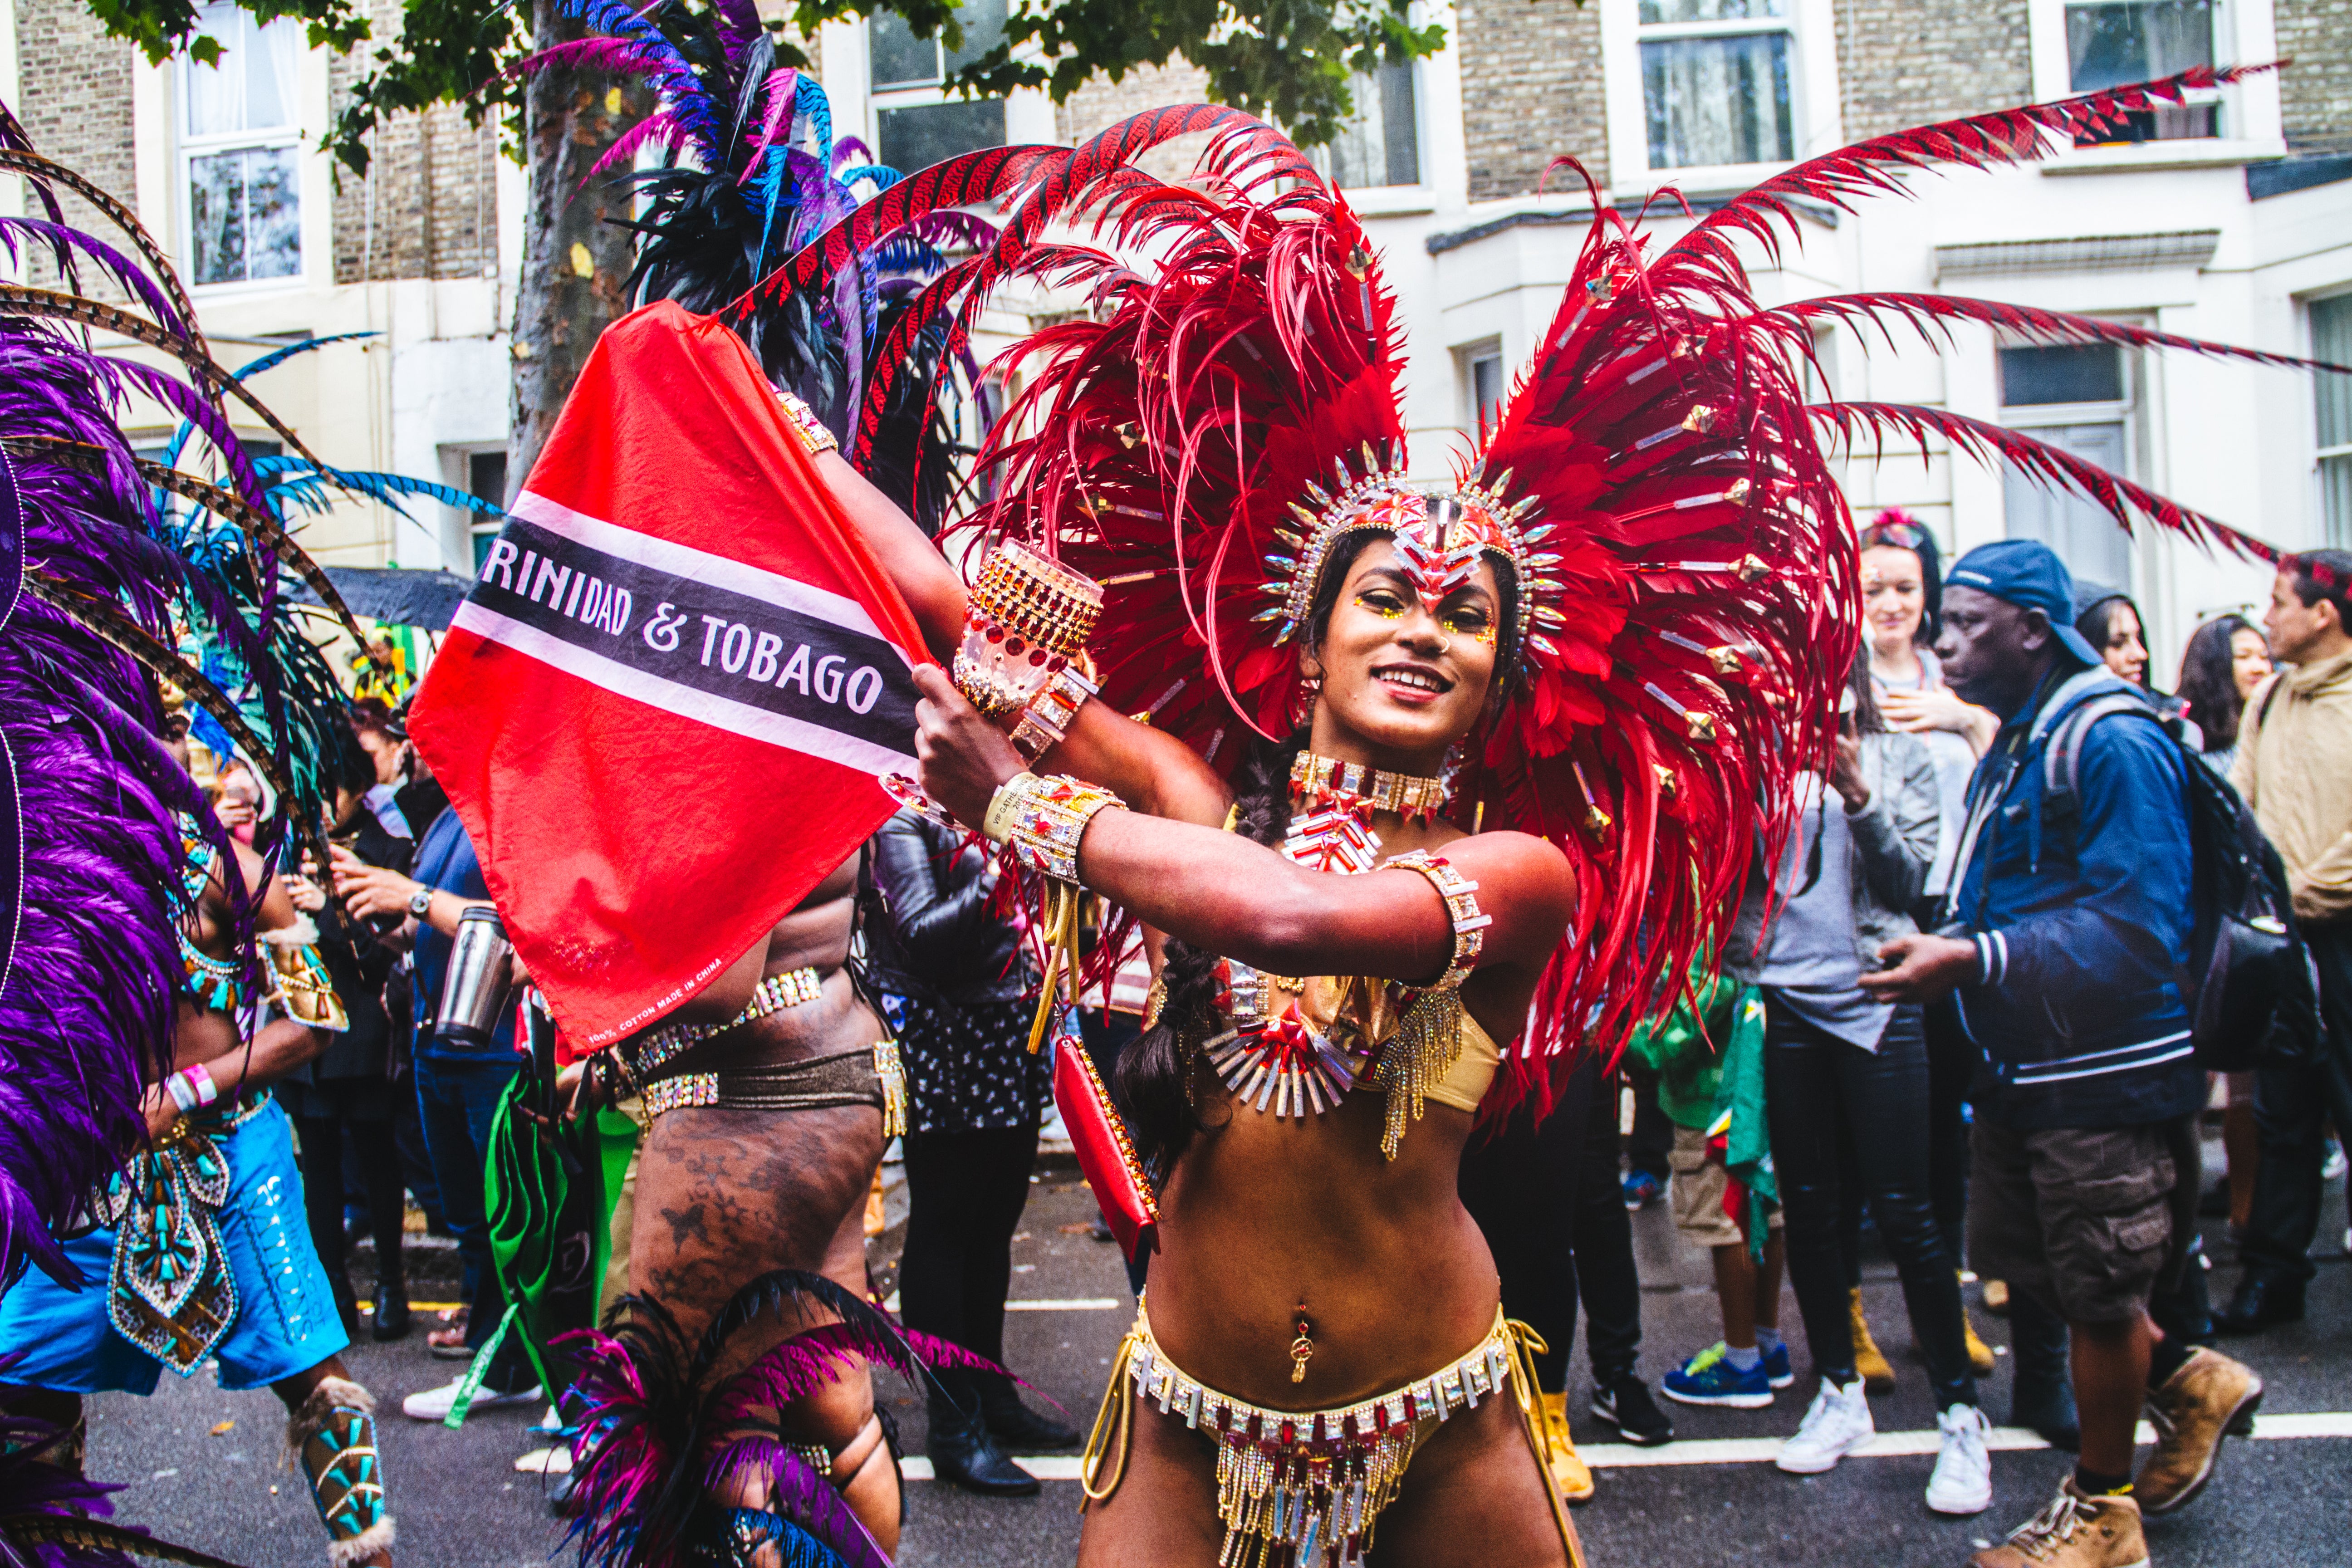 Inside London’s Notting Hill Carnival